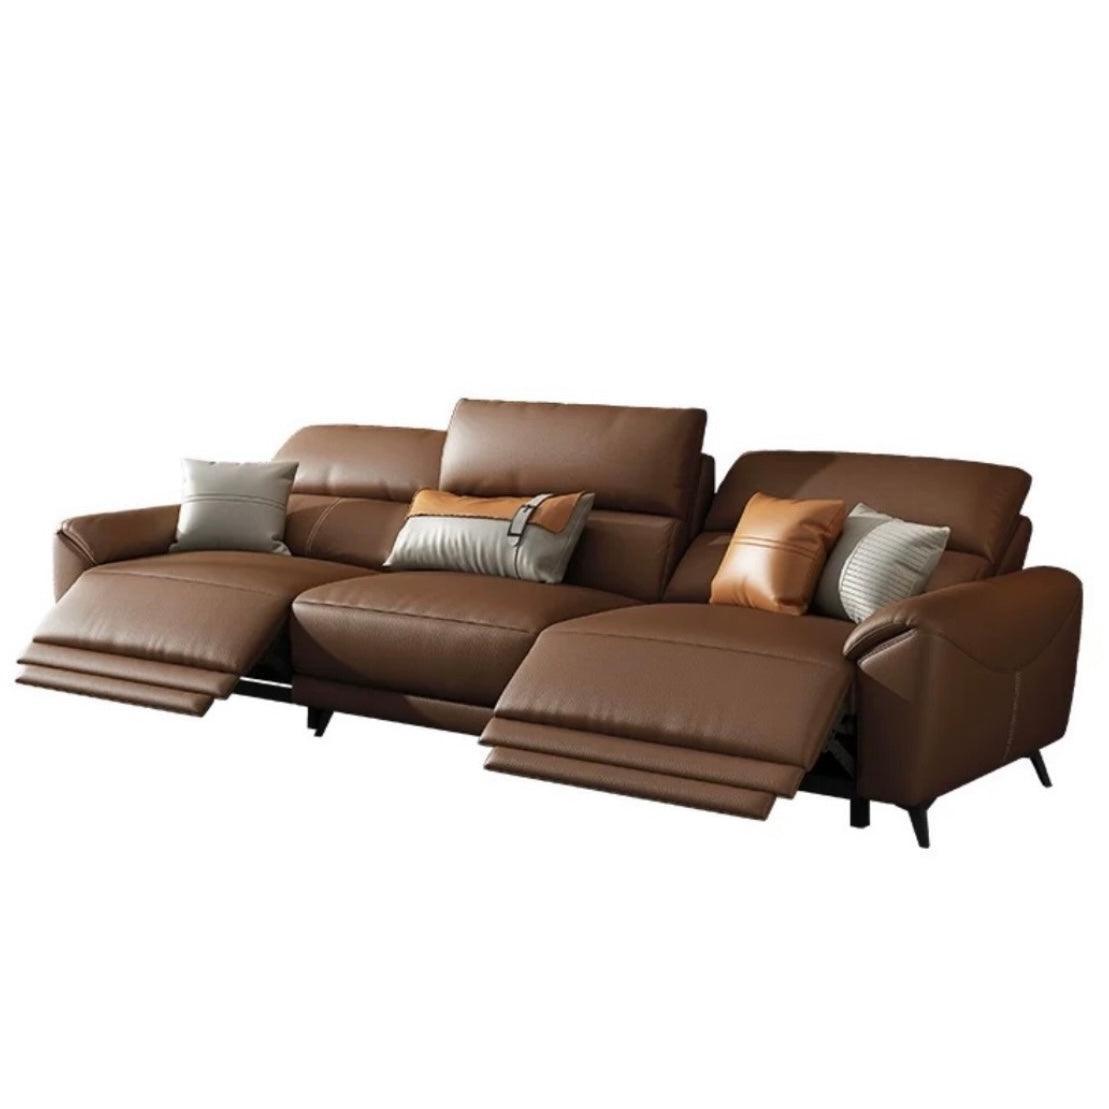 Benson Electic Recliner Leather Sofa